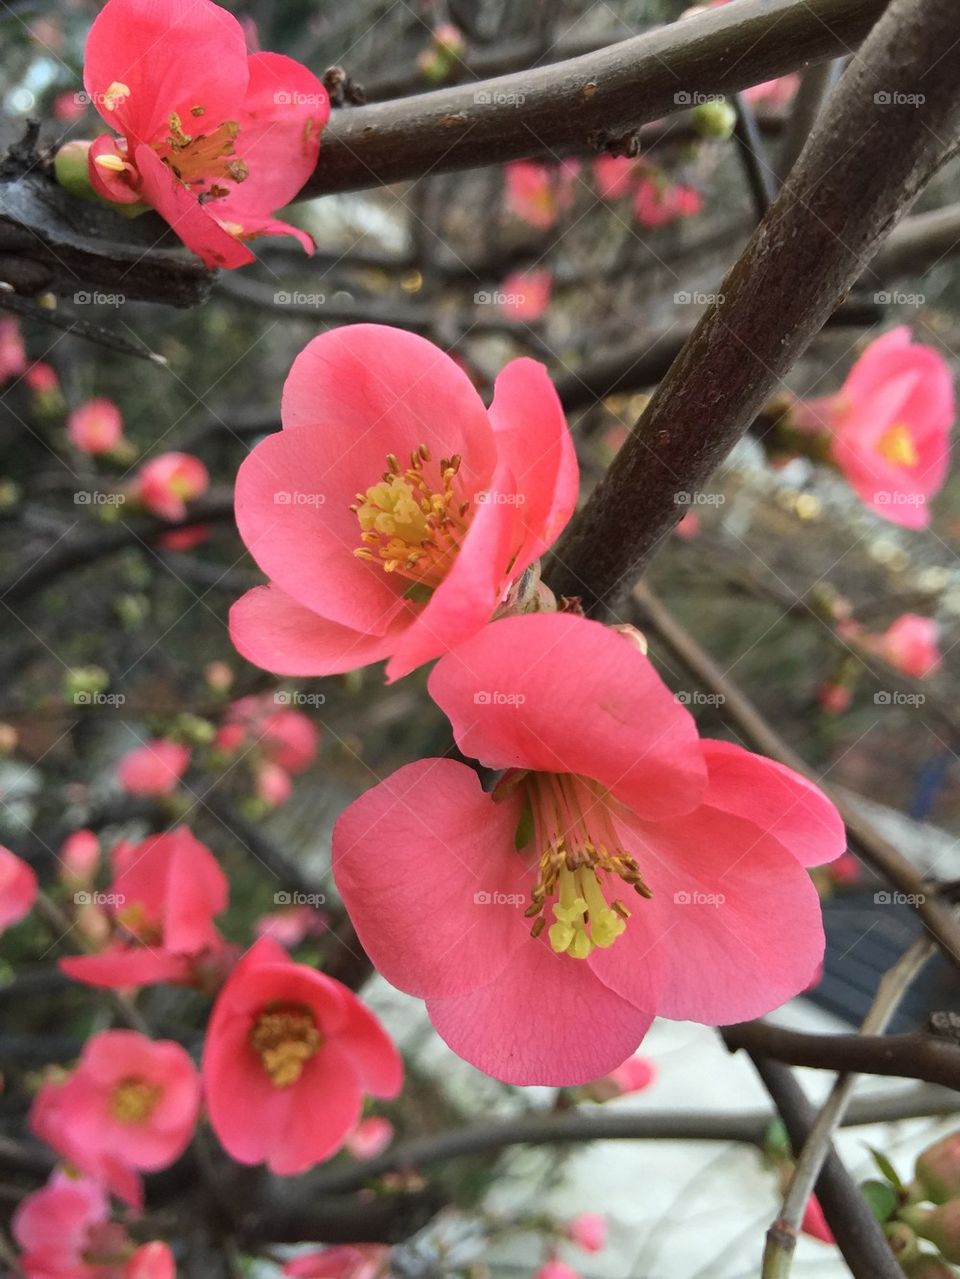 Pomegranate blossoms